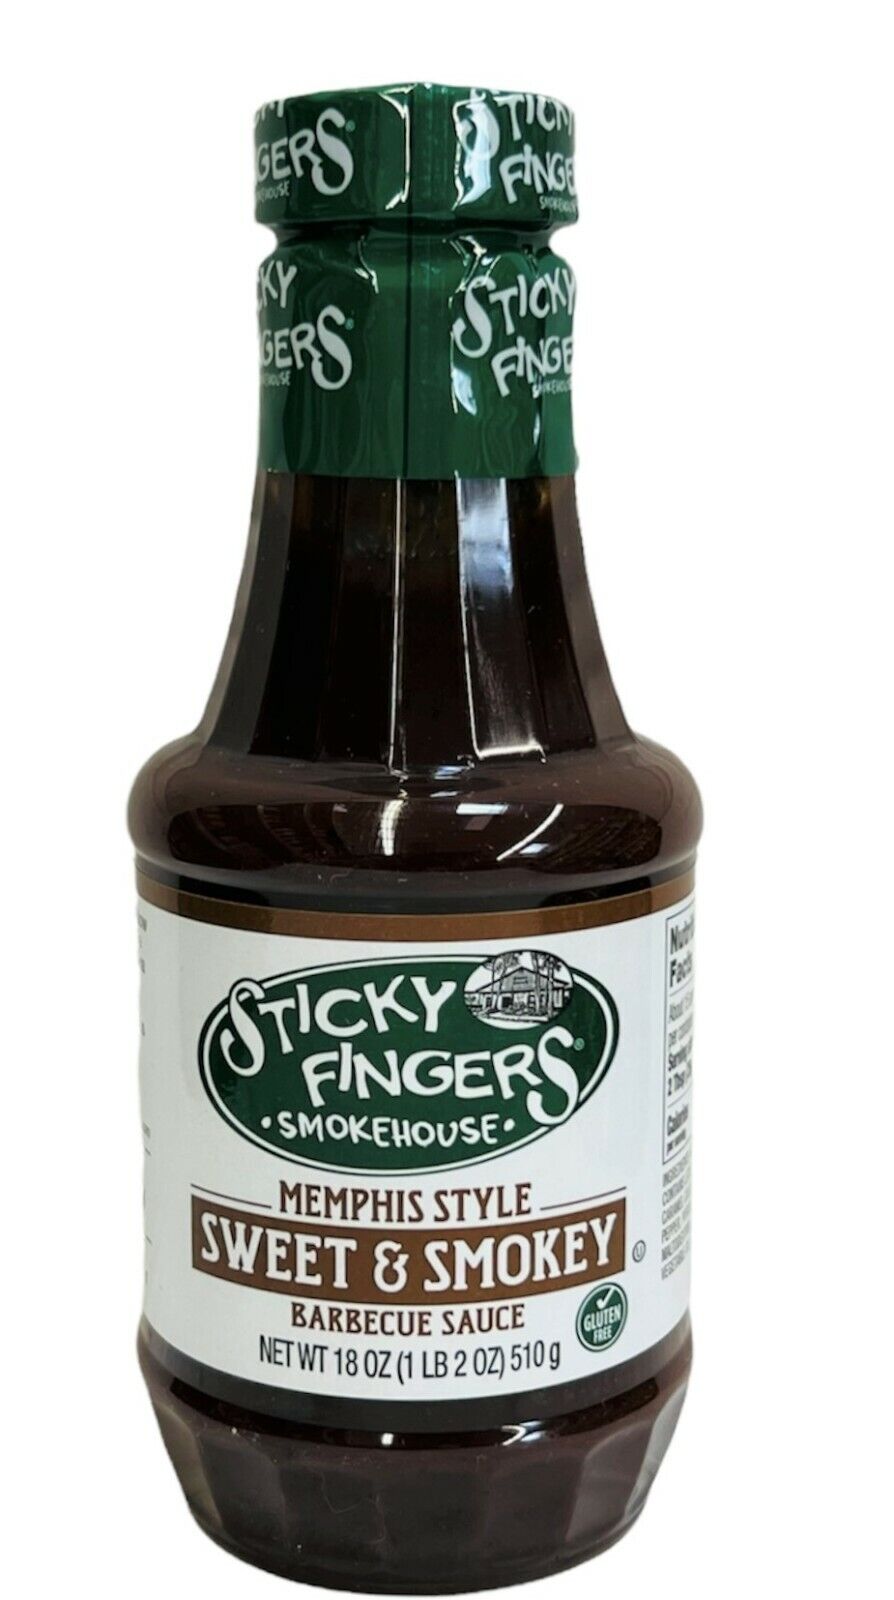 optioneel Automatisch Leidinggevende Sticky Fingers Smokehouse Memphis Style Sweet & Smokey Barbecue Sauce BBQ  18 oz 757339222220 | eBay